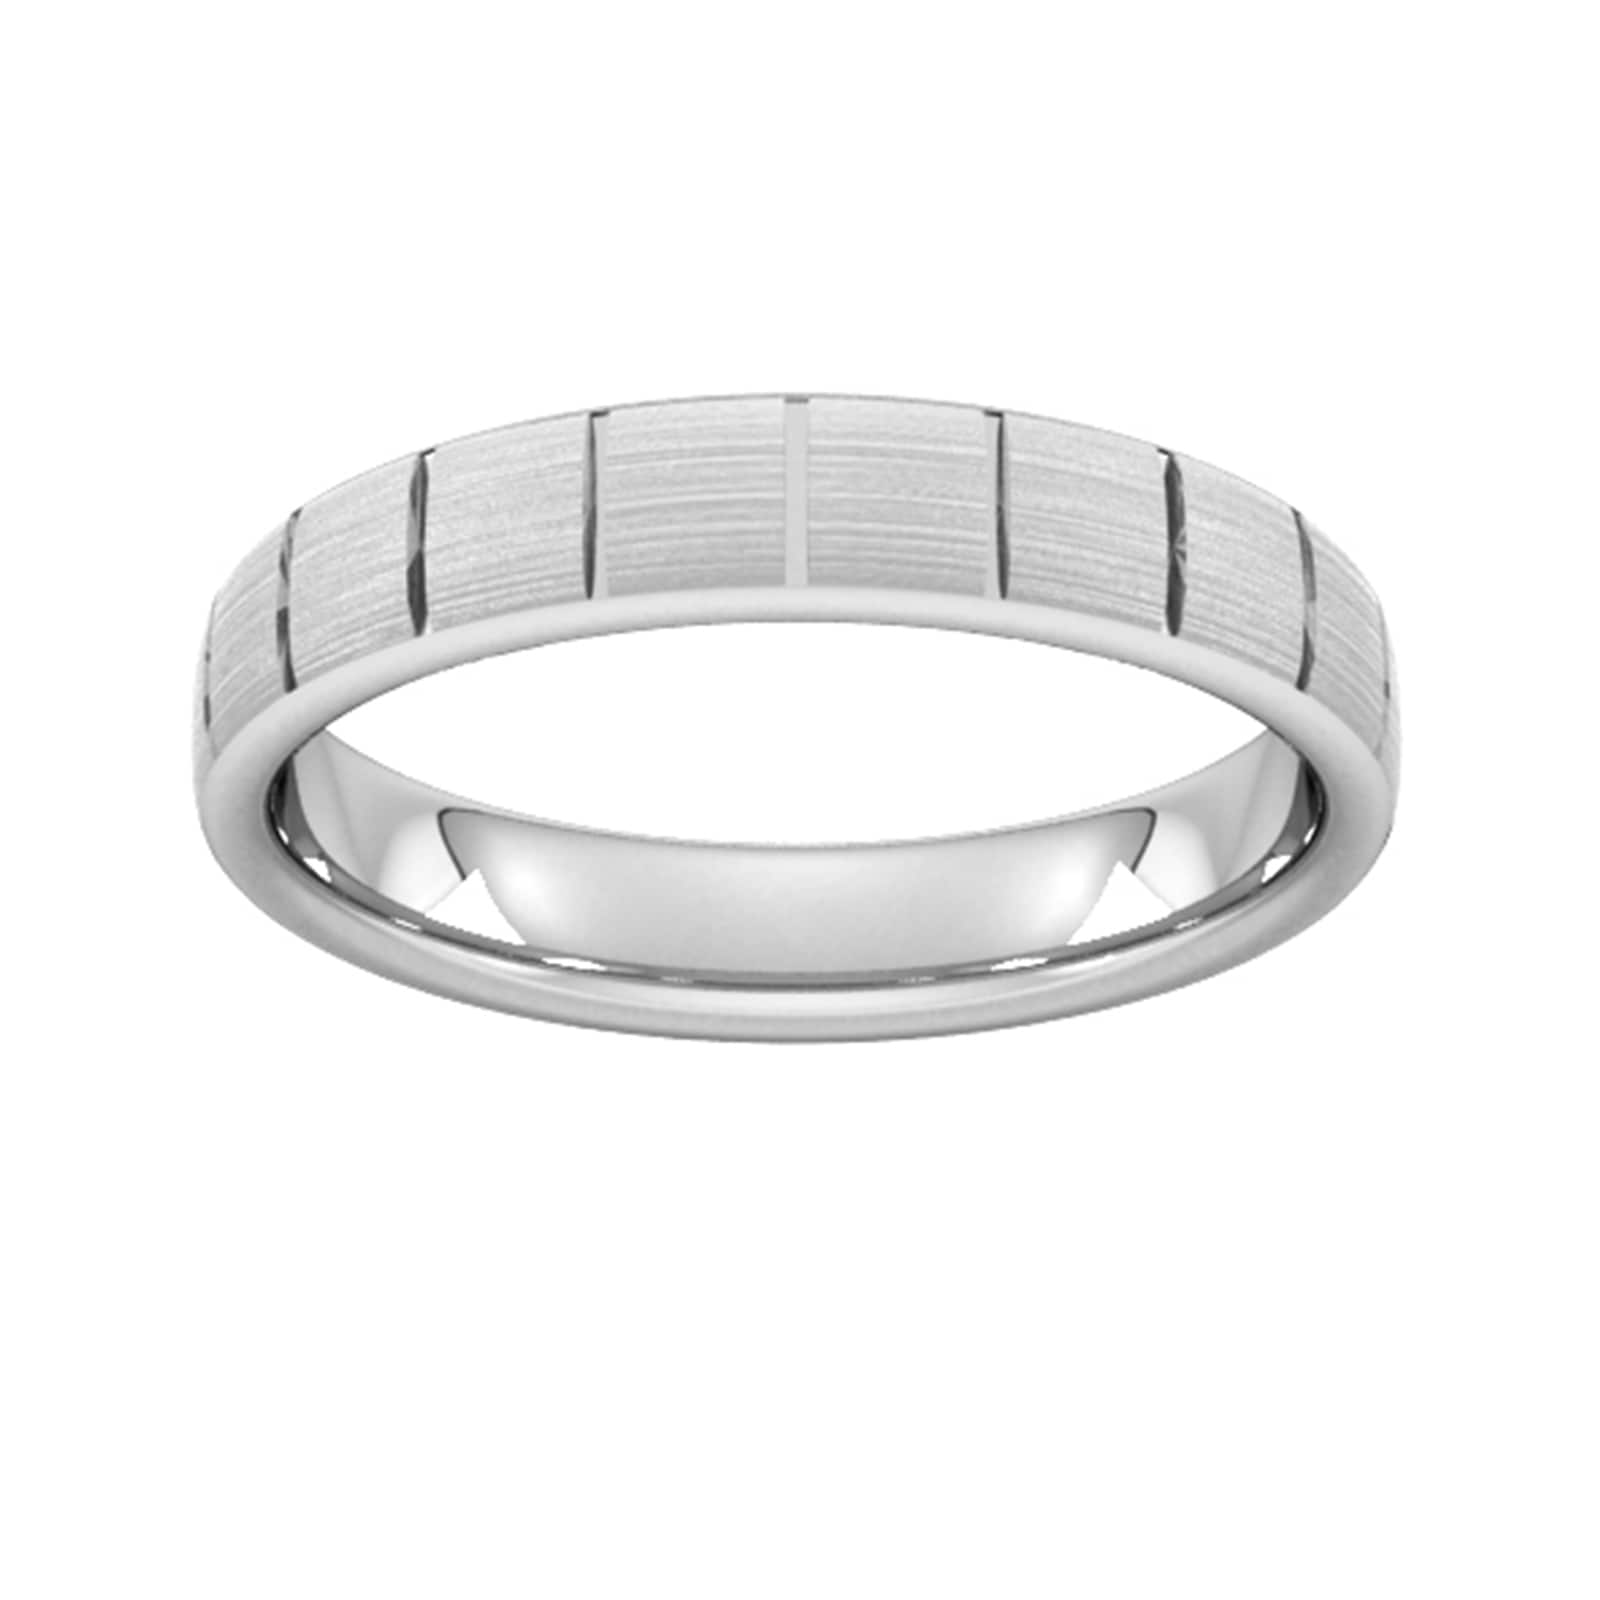 4mm Slight Court Extra Heavy Vertical Lines Wedding Ring In 950 Palladium - Ring Size Q